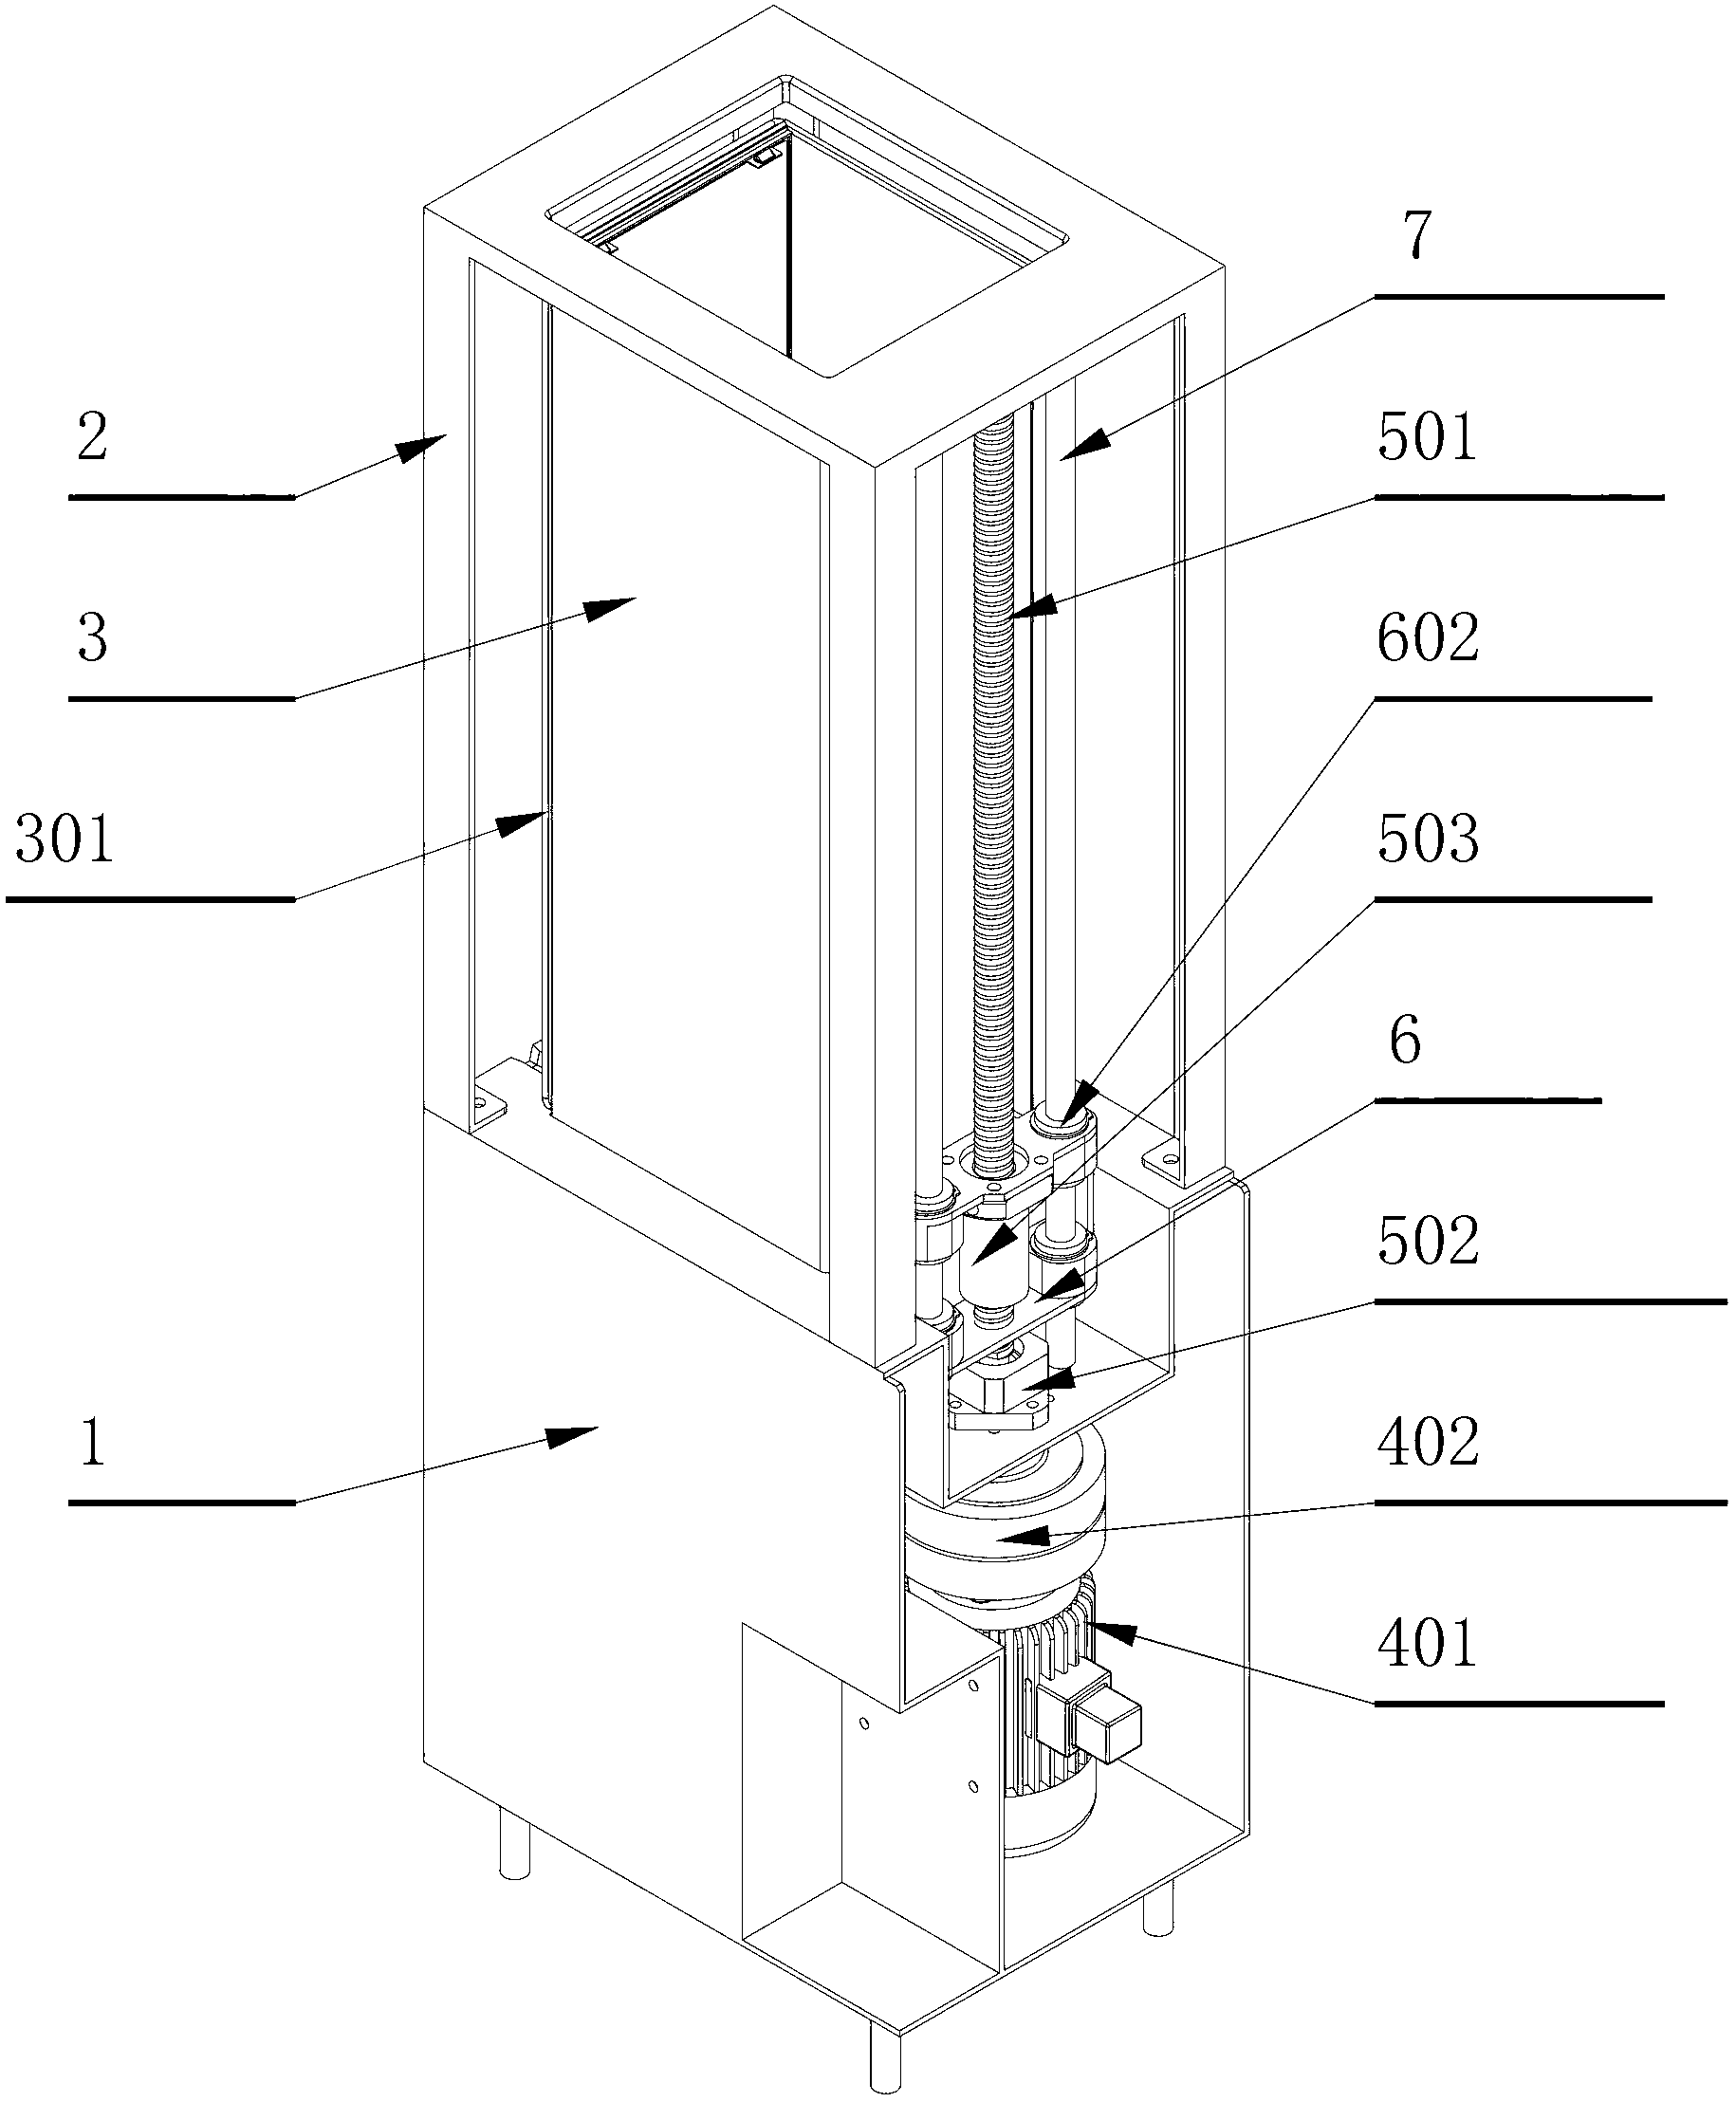 Automatic cartridge clip type feeding device